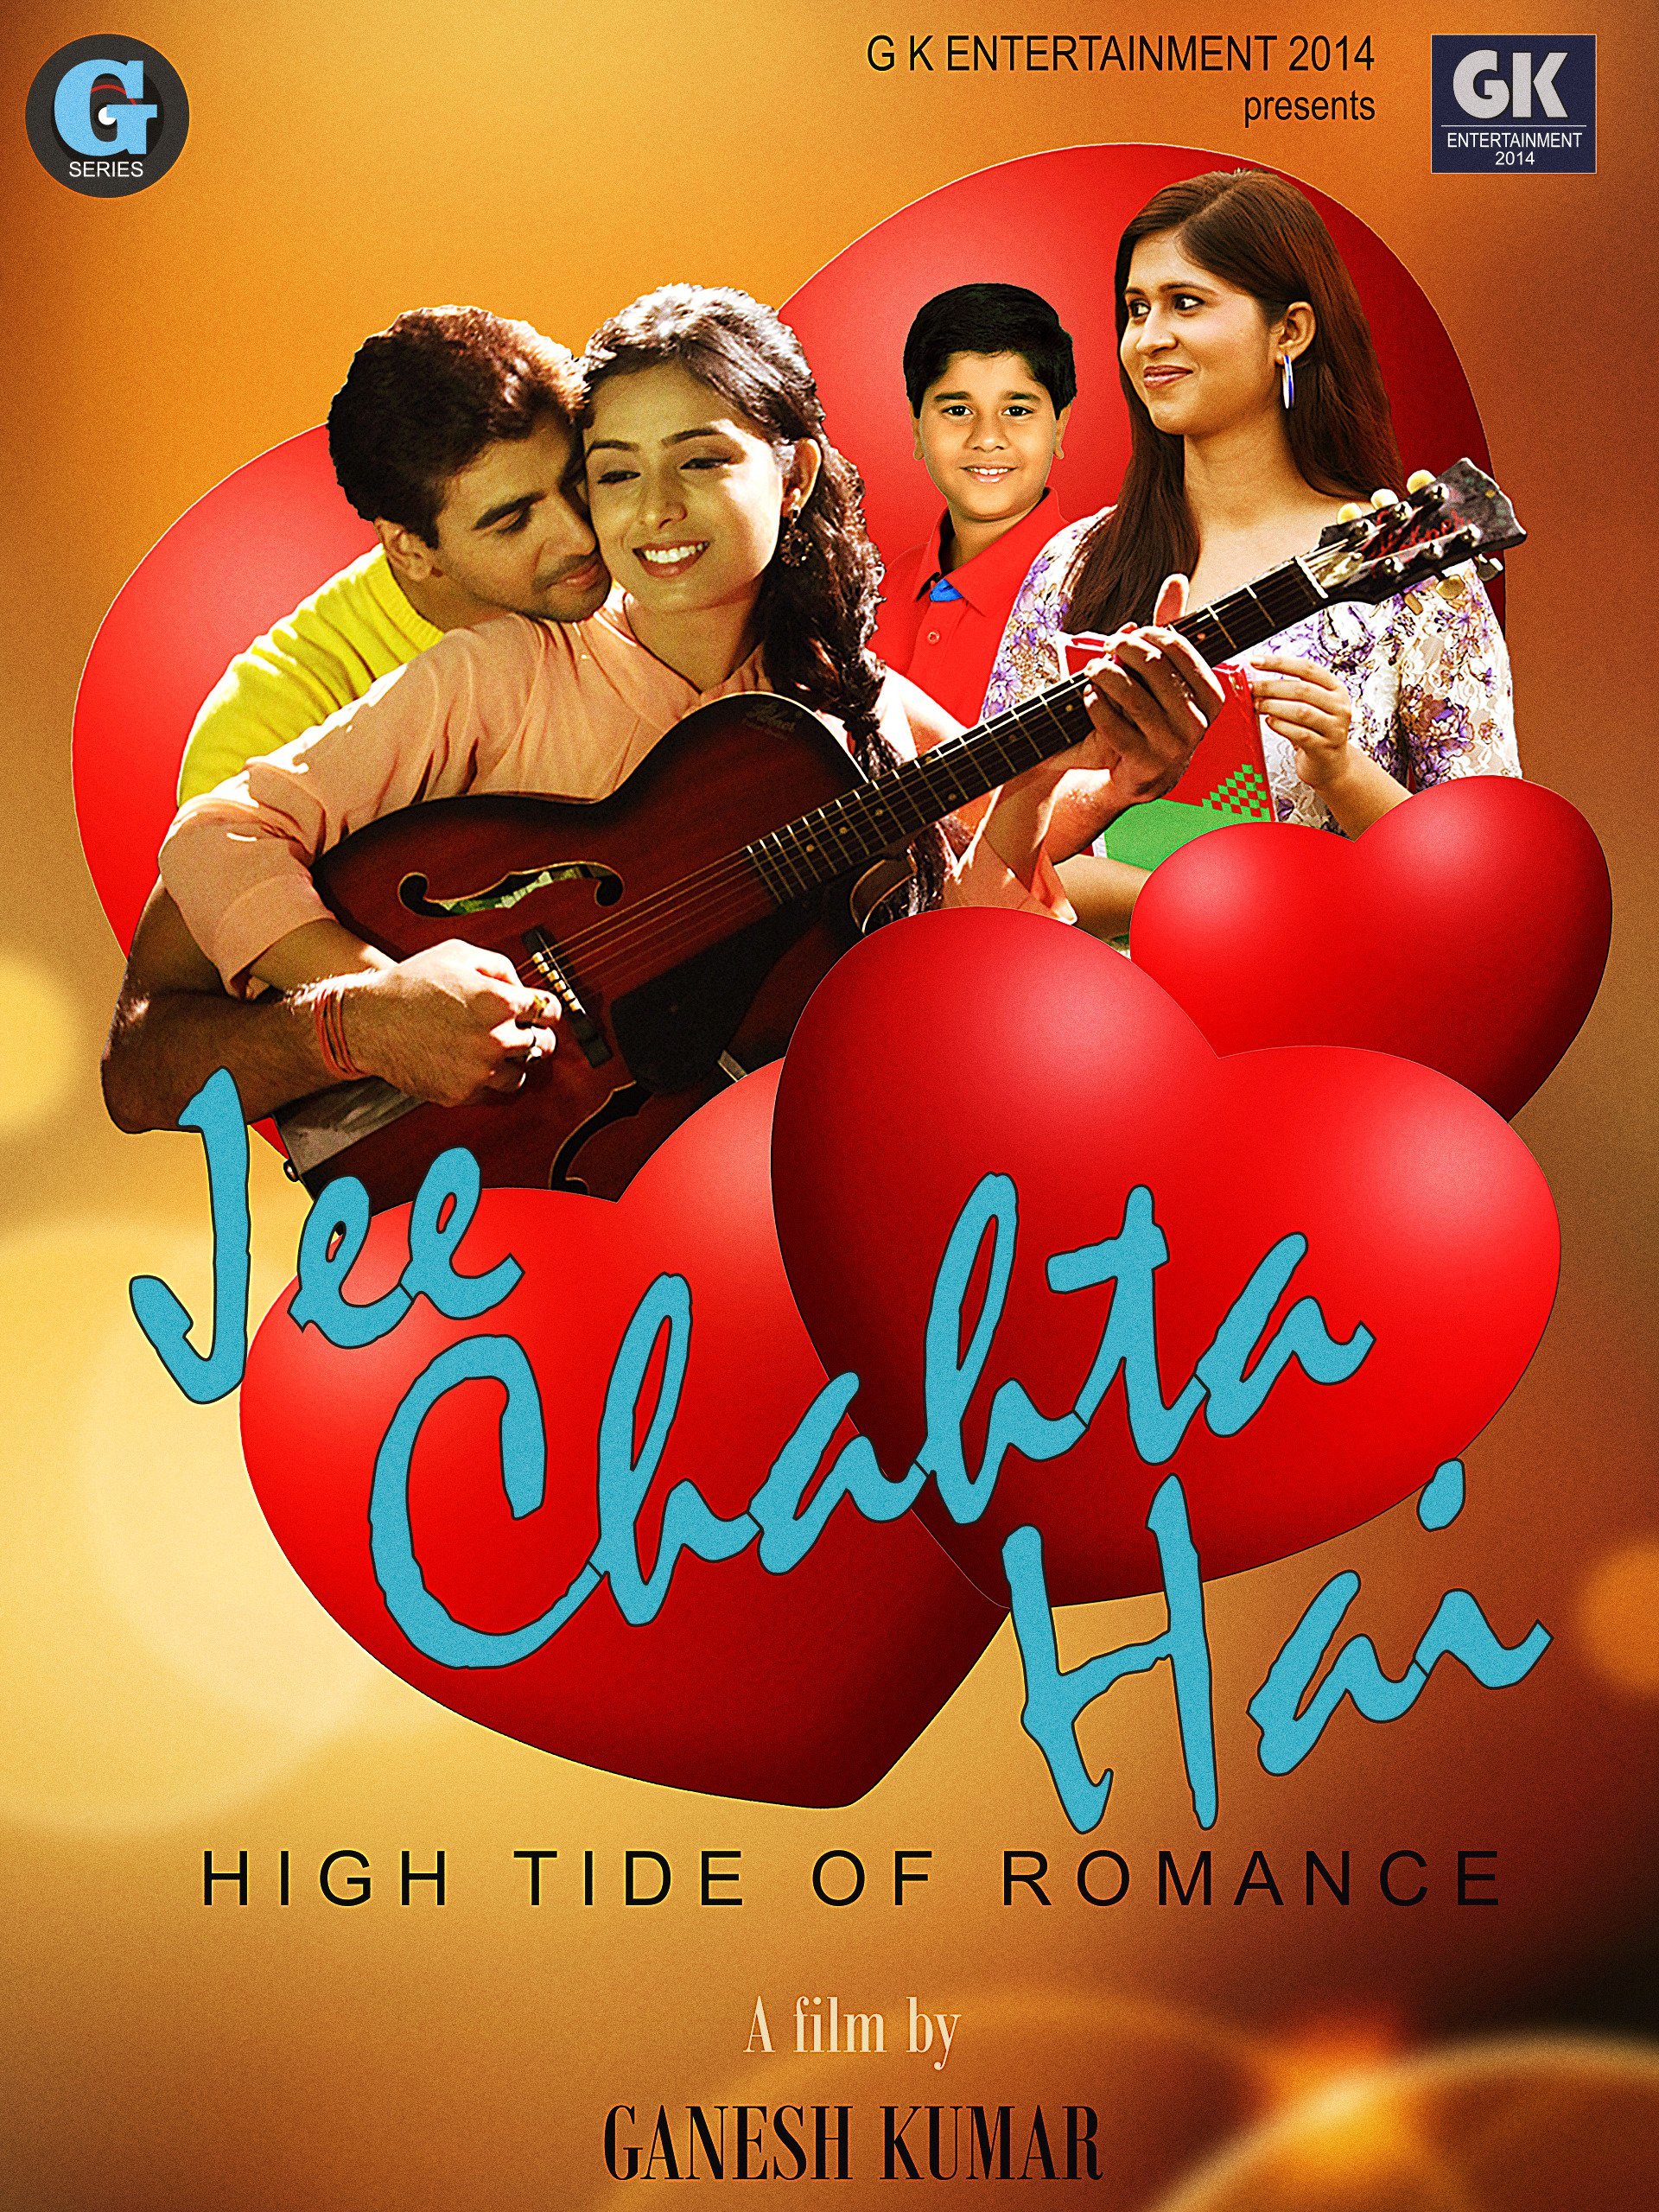 Download Jee Chahta Hai High Tide Of Romance 2015 Hindi Movie 720p HDRip 900MB